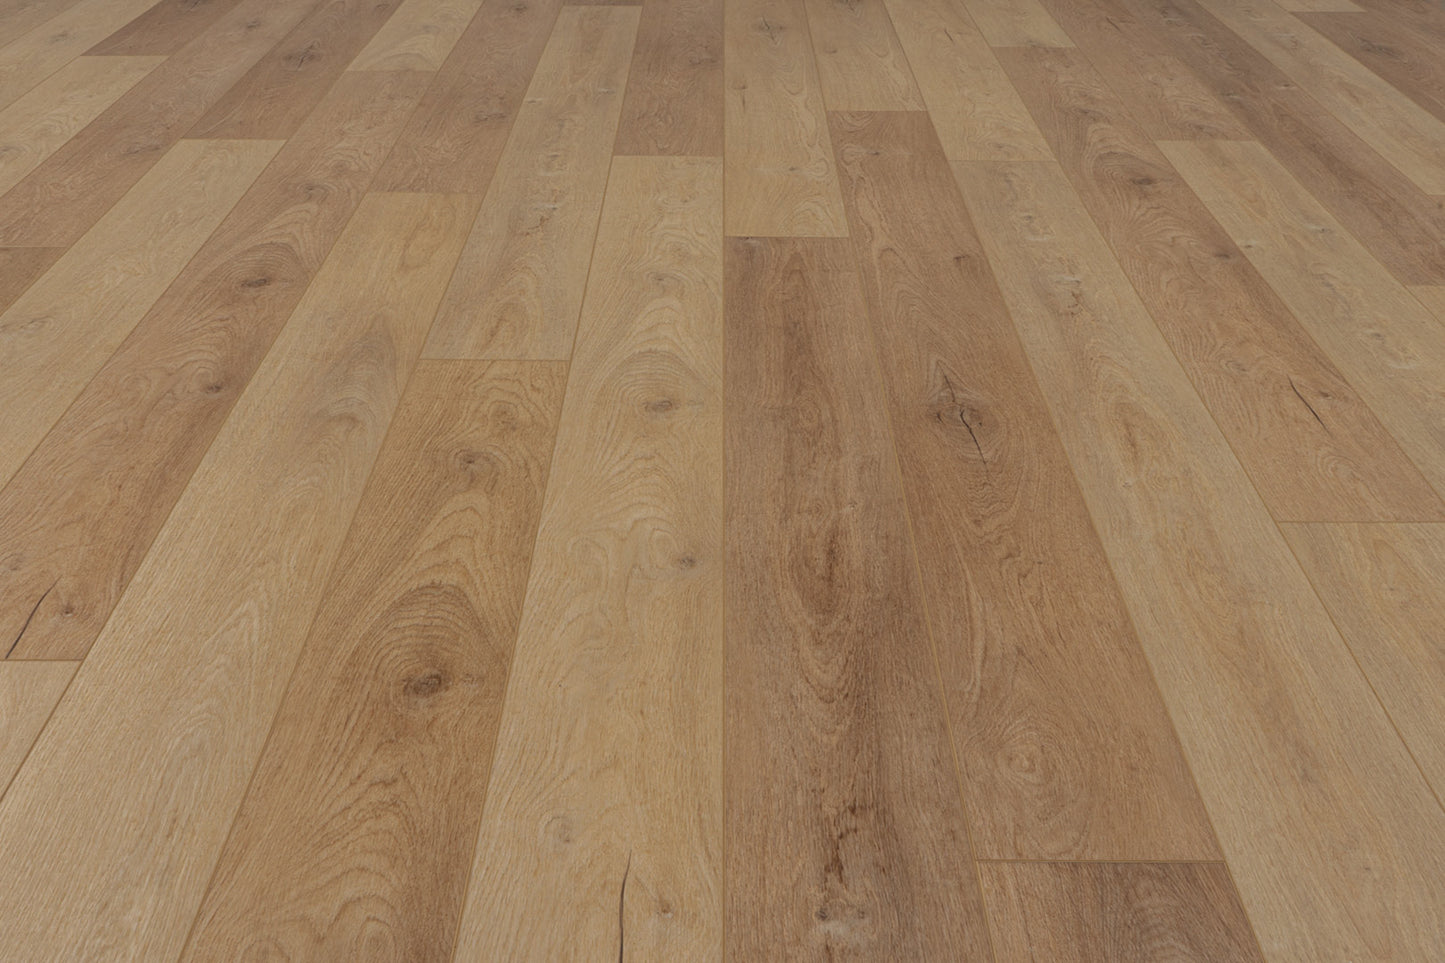 SWEET TALKER - LVP Waterproof Flooring - 7.15 in. wide plank